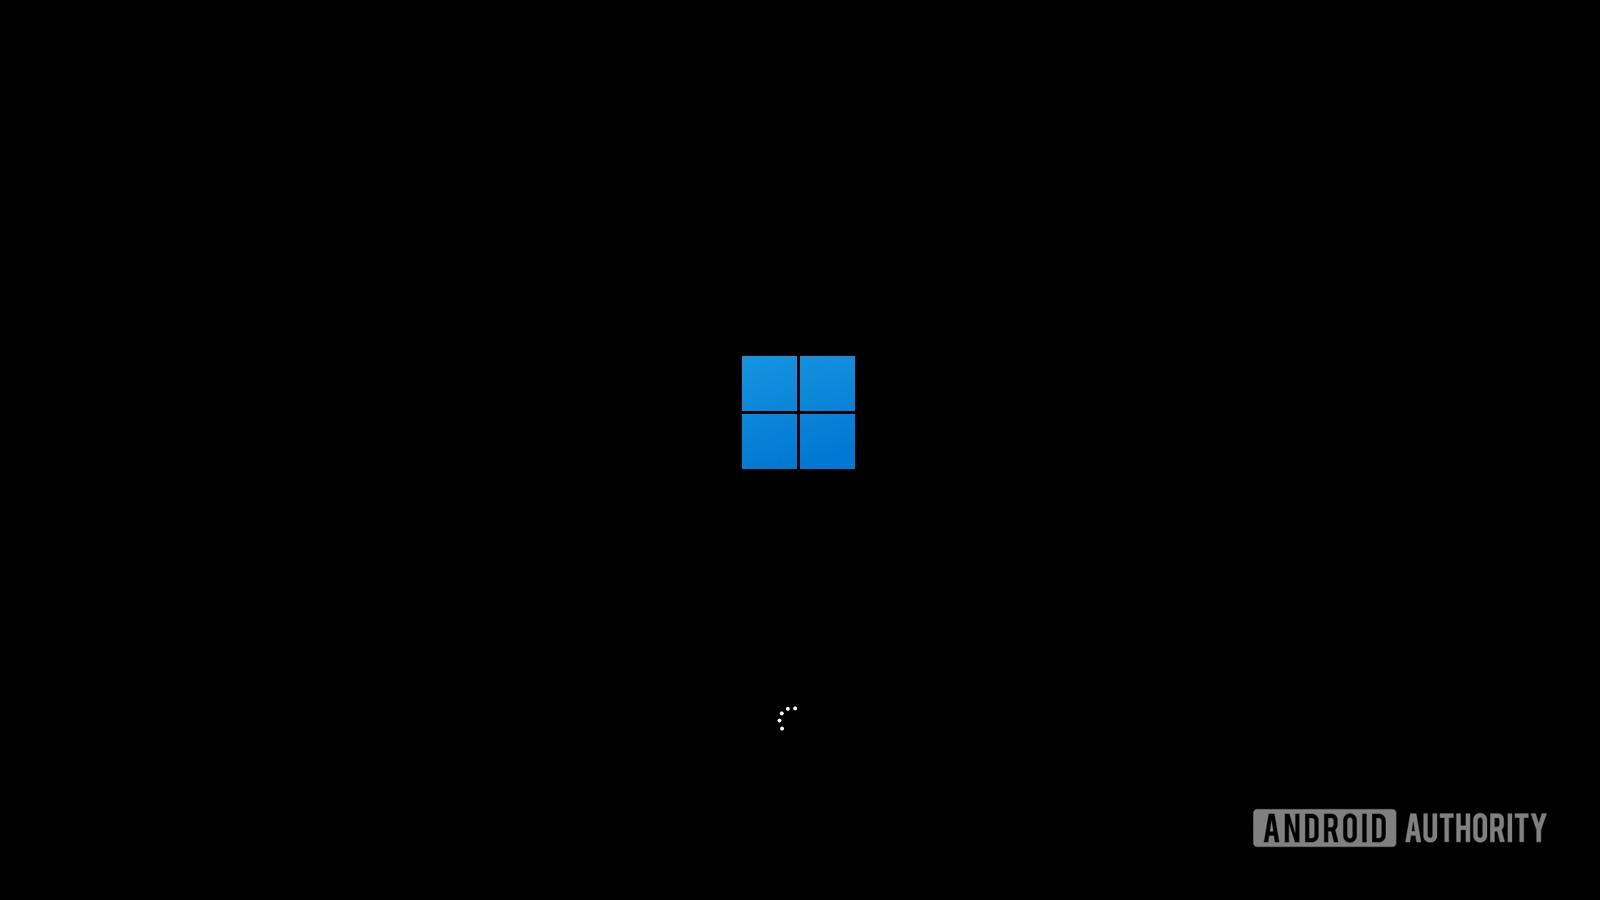 Windows 11 logo startup screen